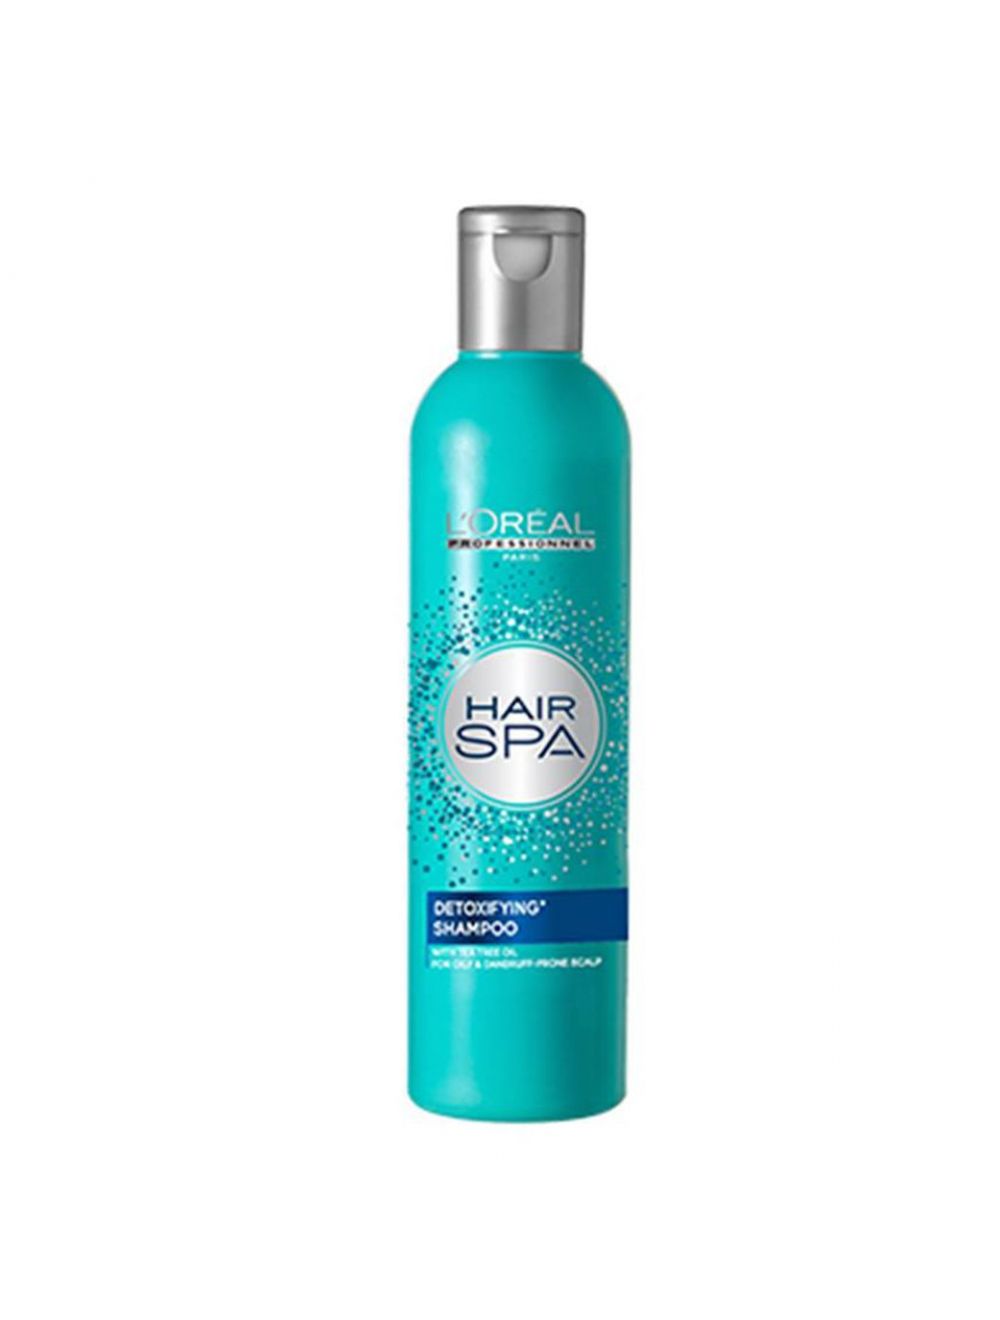 L'Oreal Professionnel Hair Spa Detoxifying Shampoo (250ml)